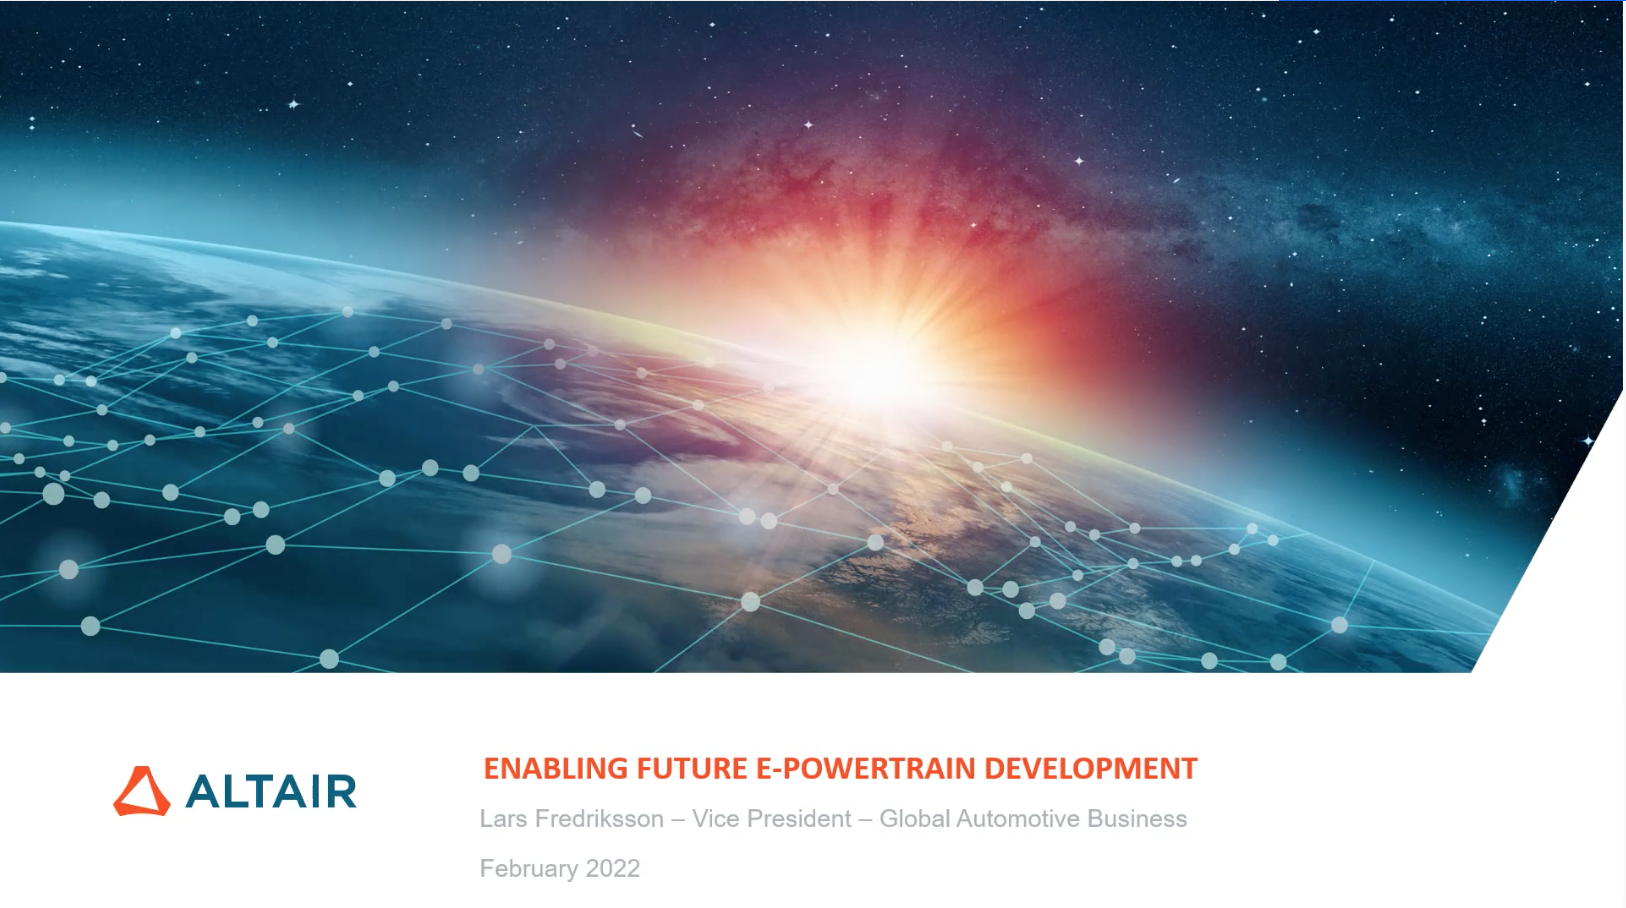 Enabling Future e-Powertrain Development